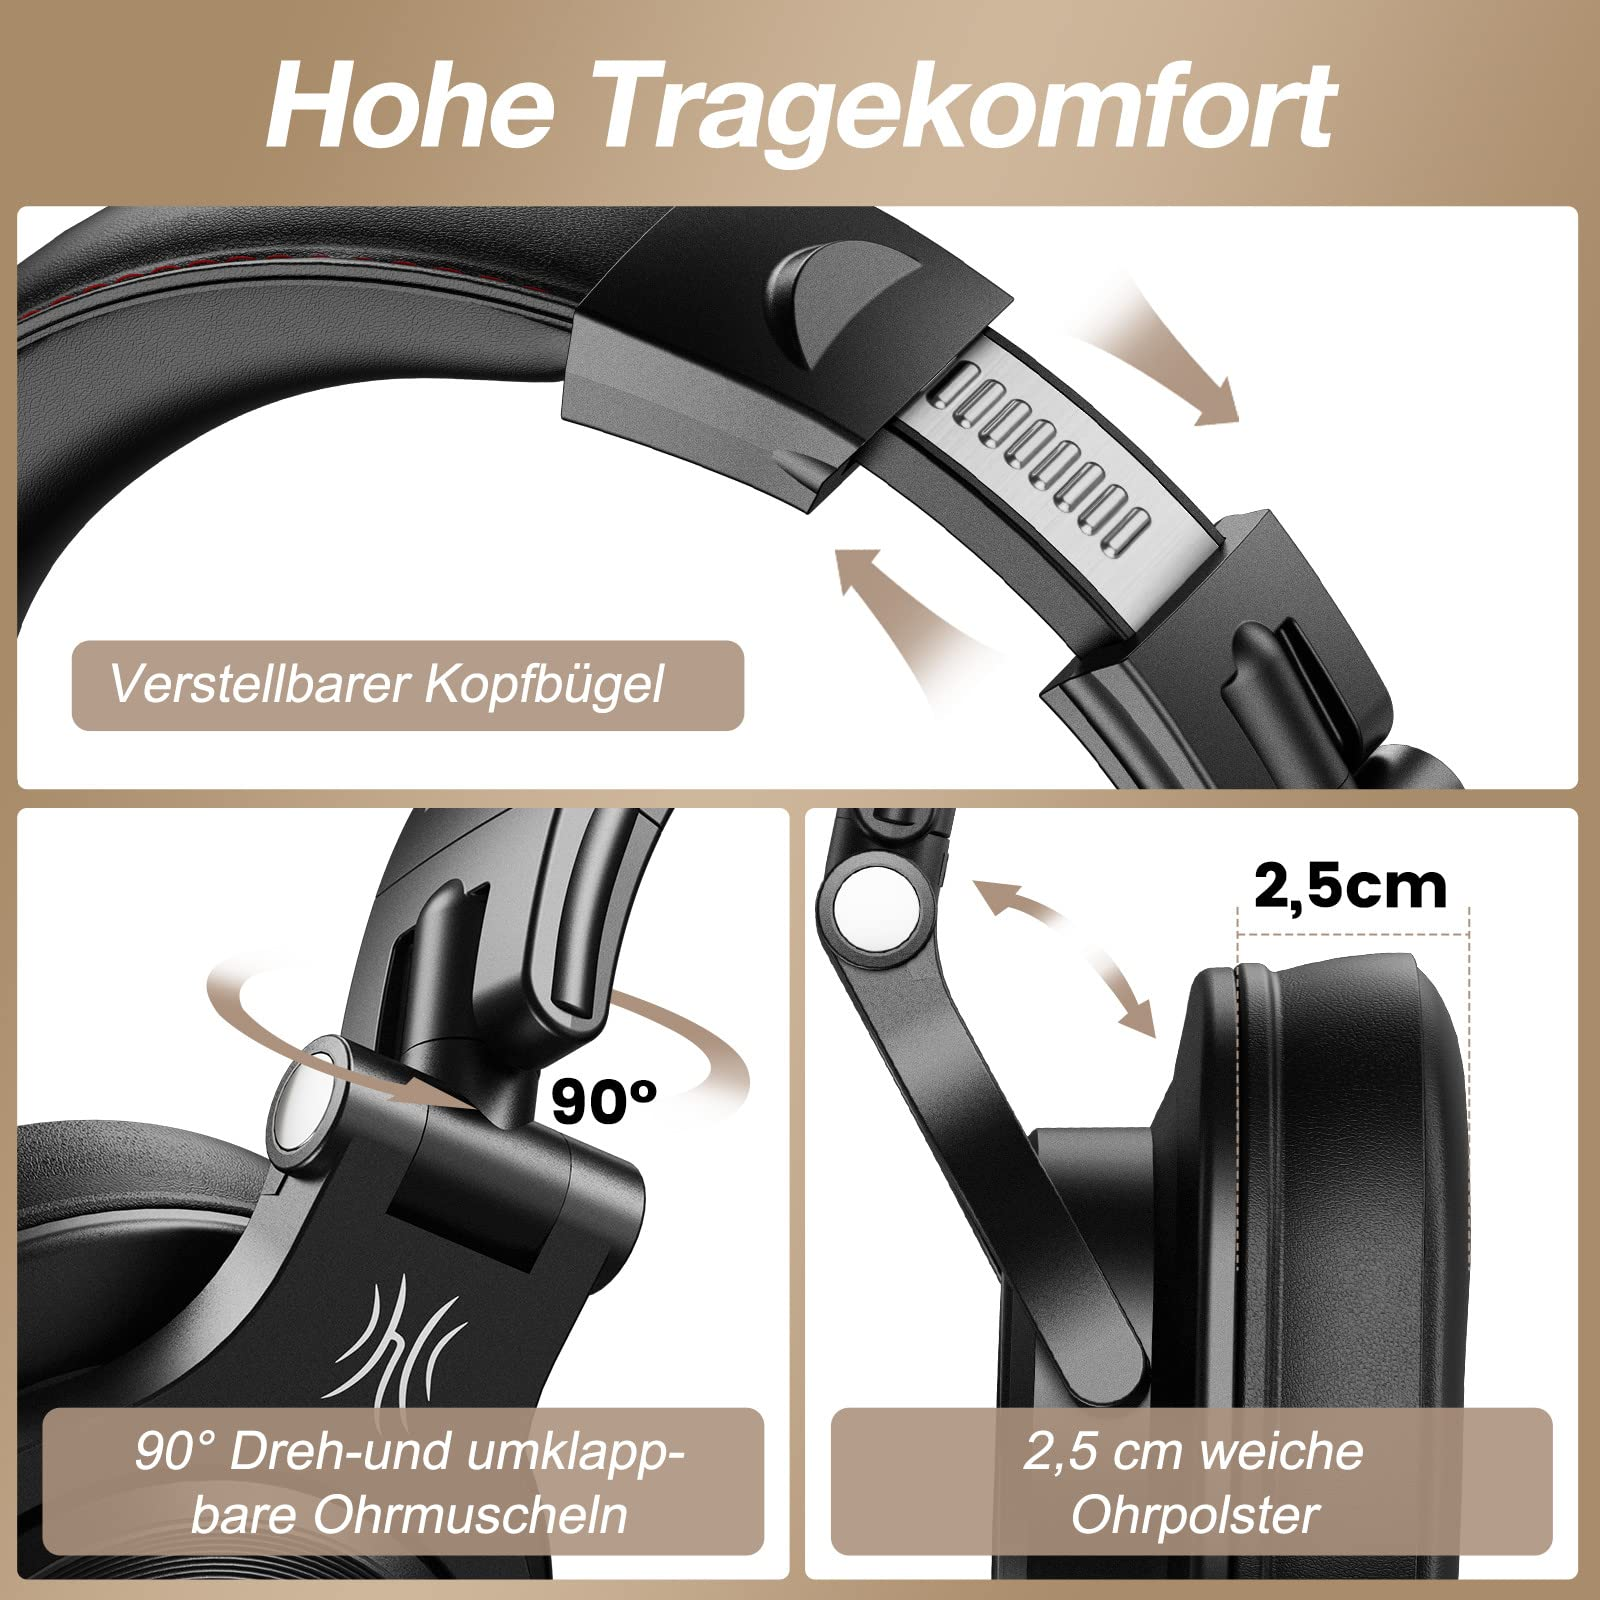 ONEODIO A70, Schwarz Over-ear Bluetooth Kopfhörer